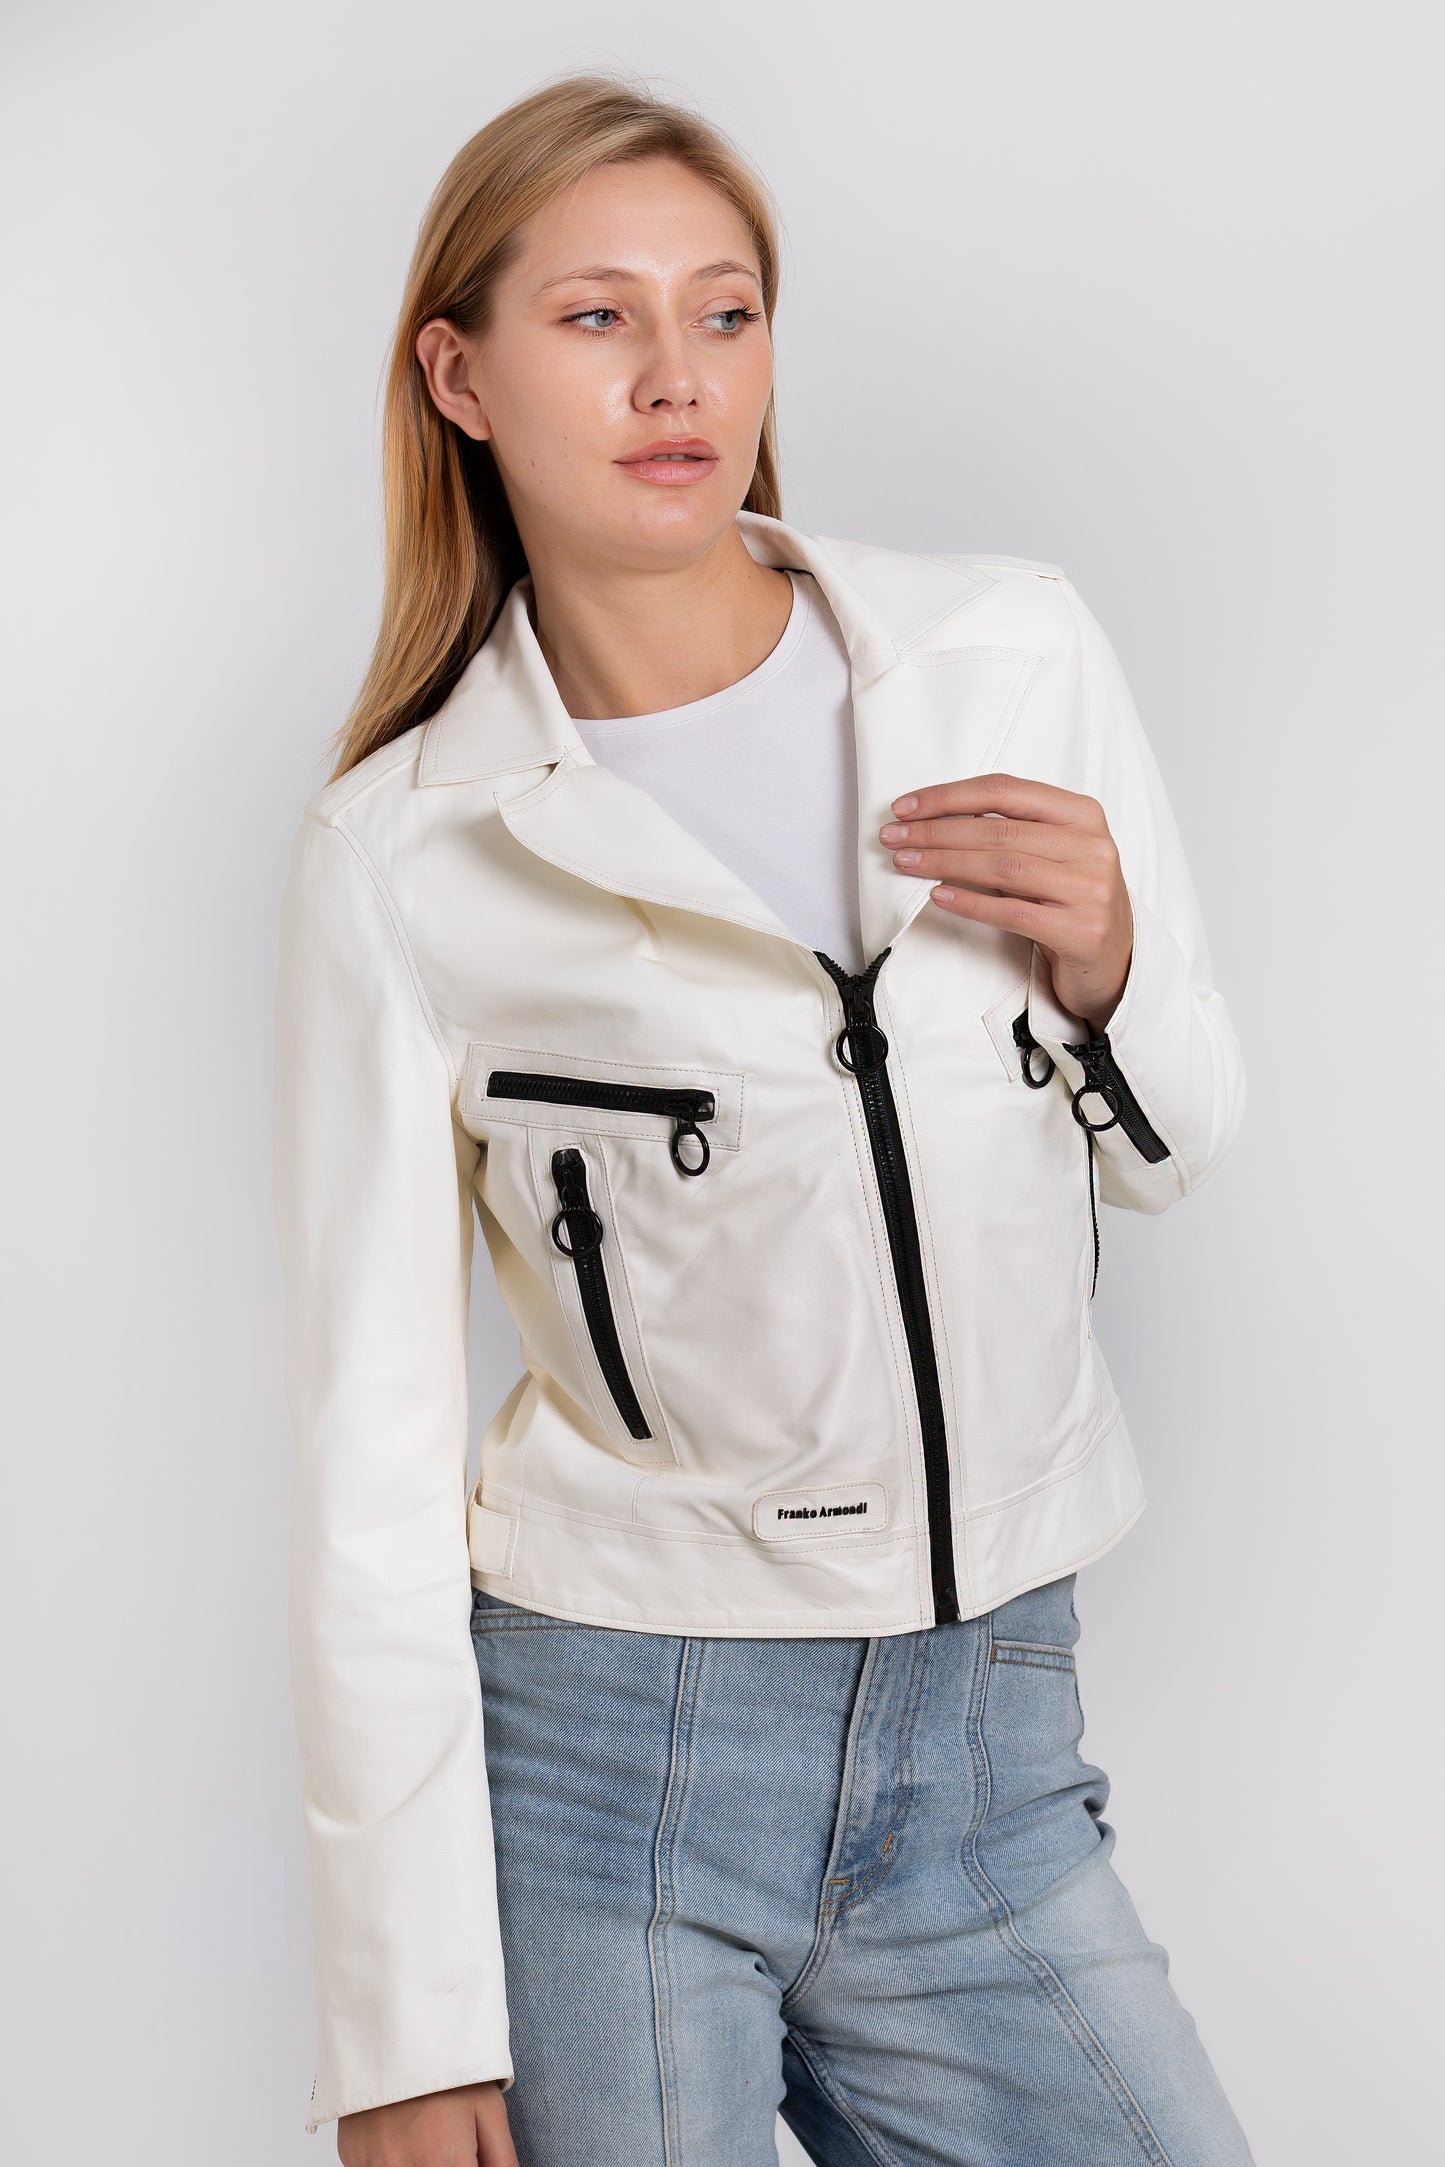 The Altona Leather White Jacket